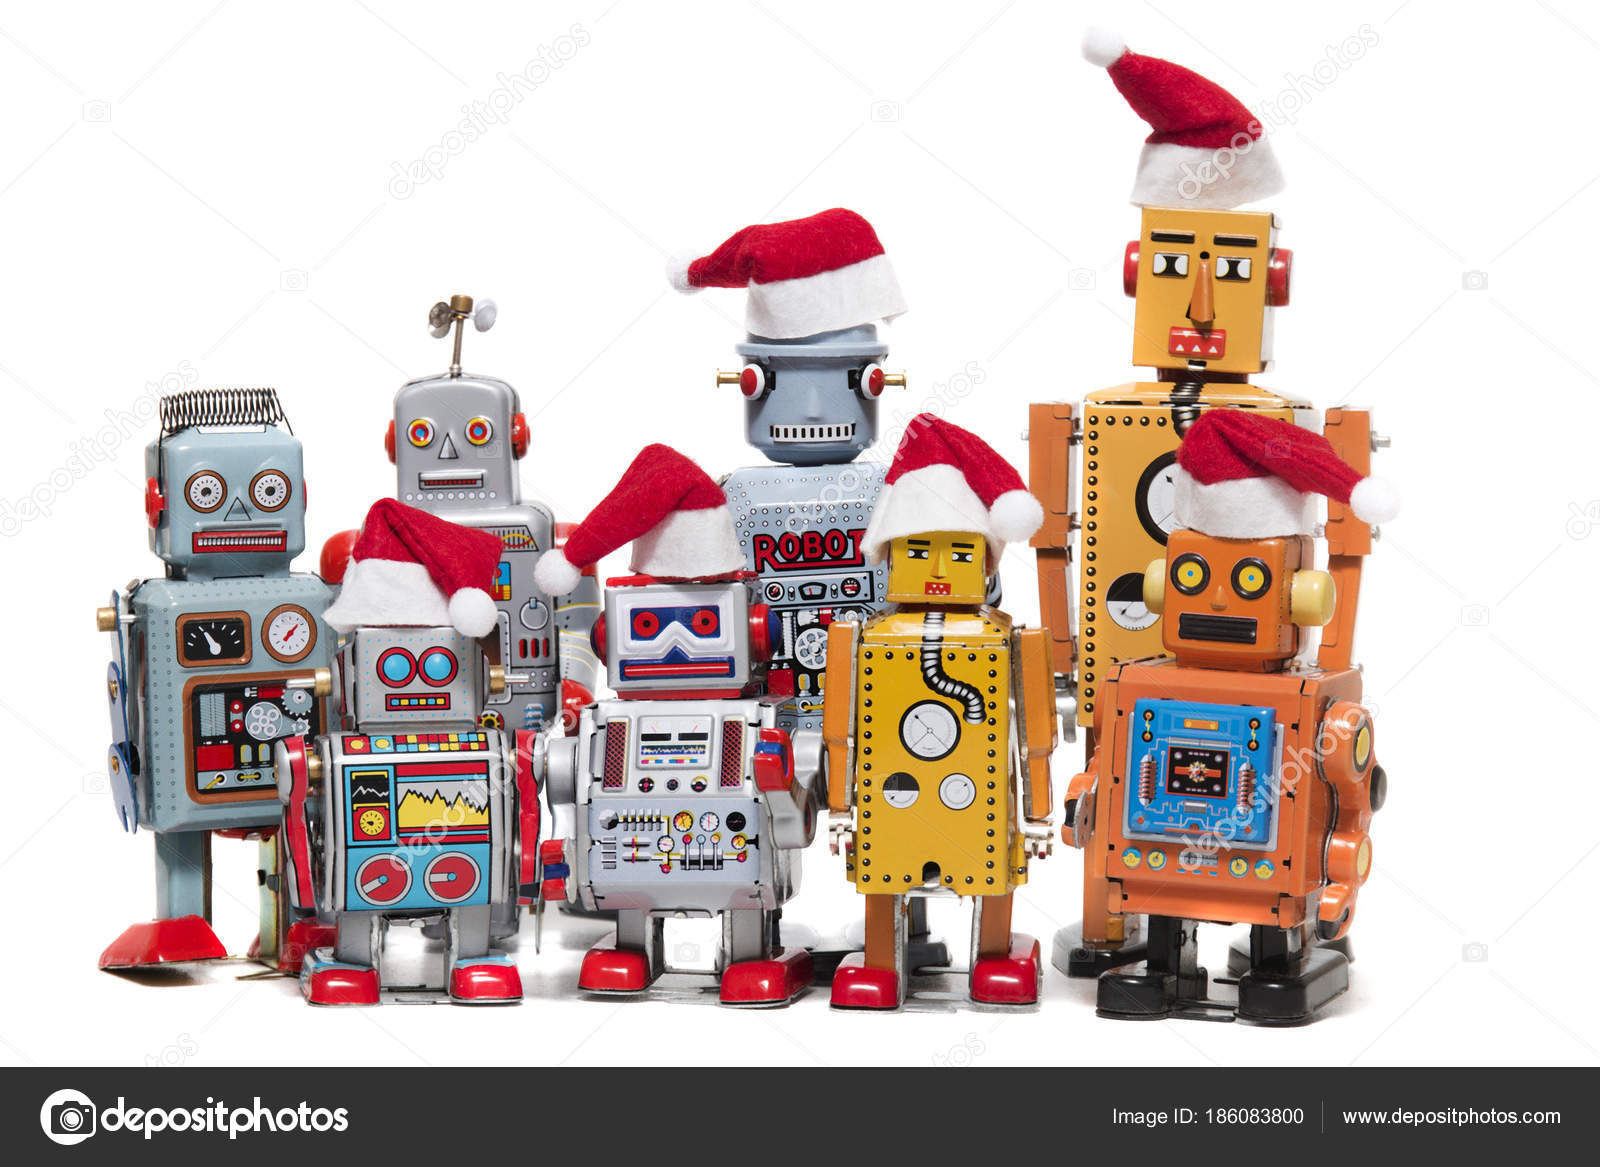 Wind Up Walking Santa Claus Robot Tin Toy Vintage Collectible/Christmas Gift 